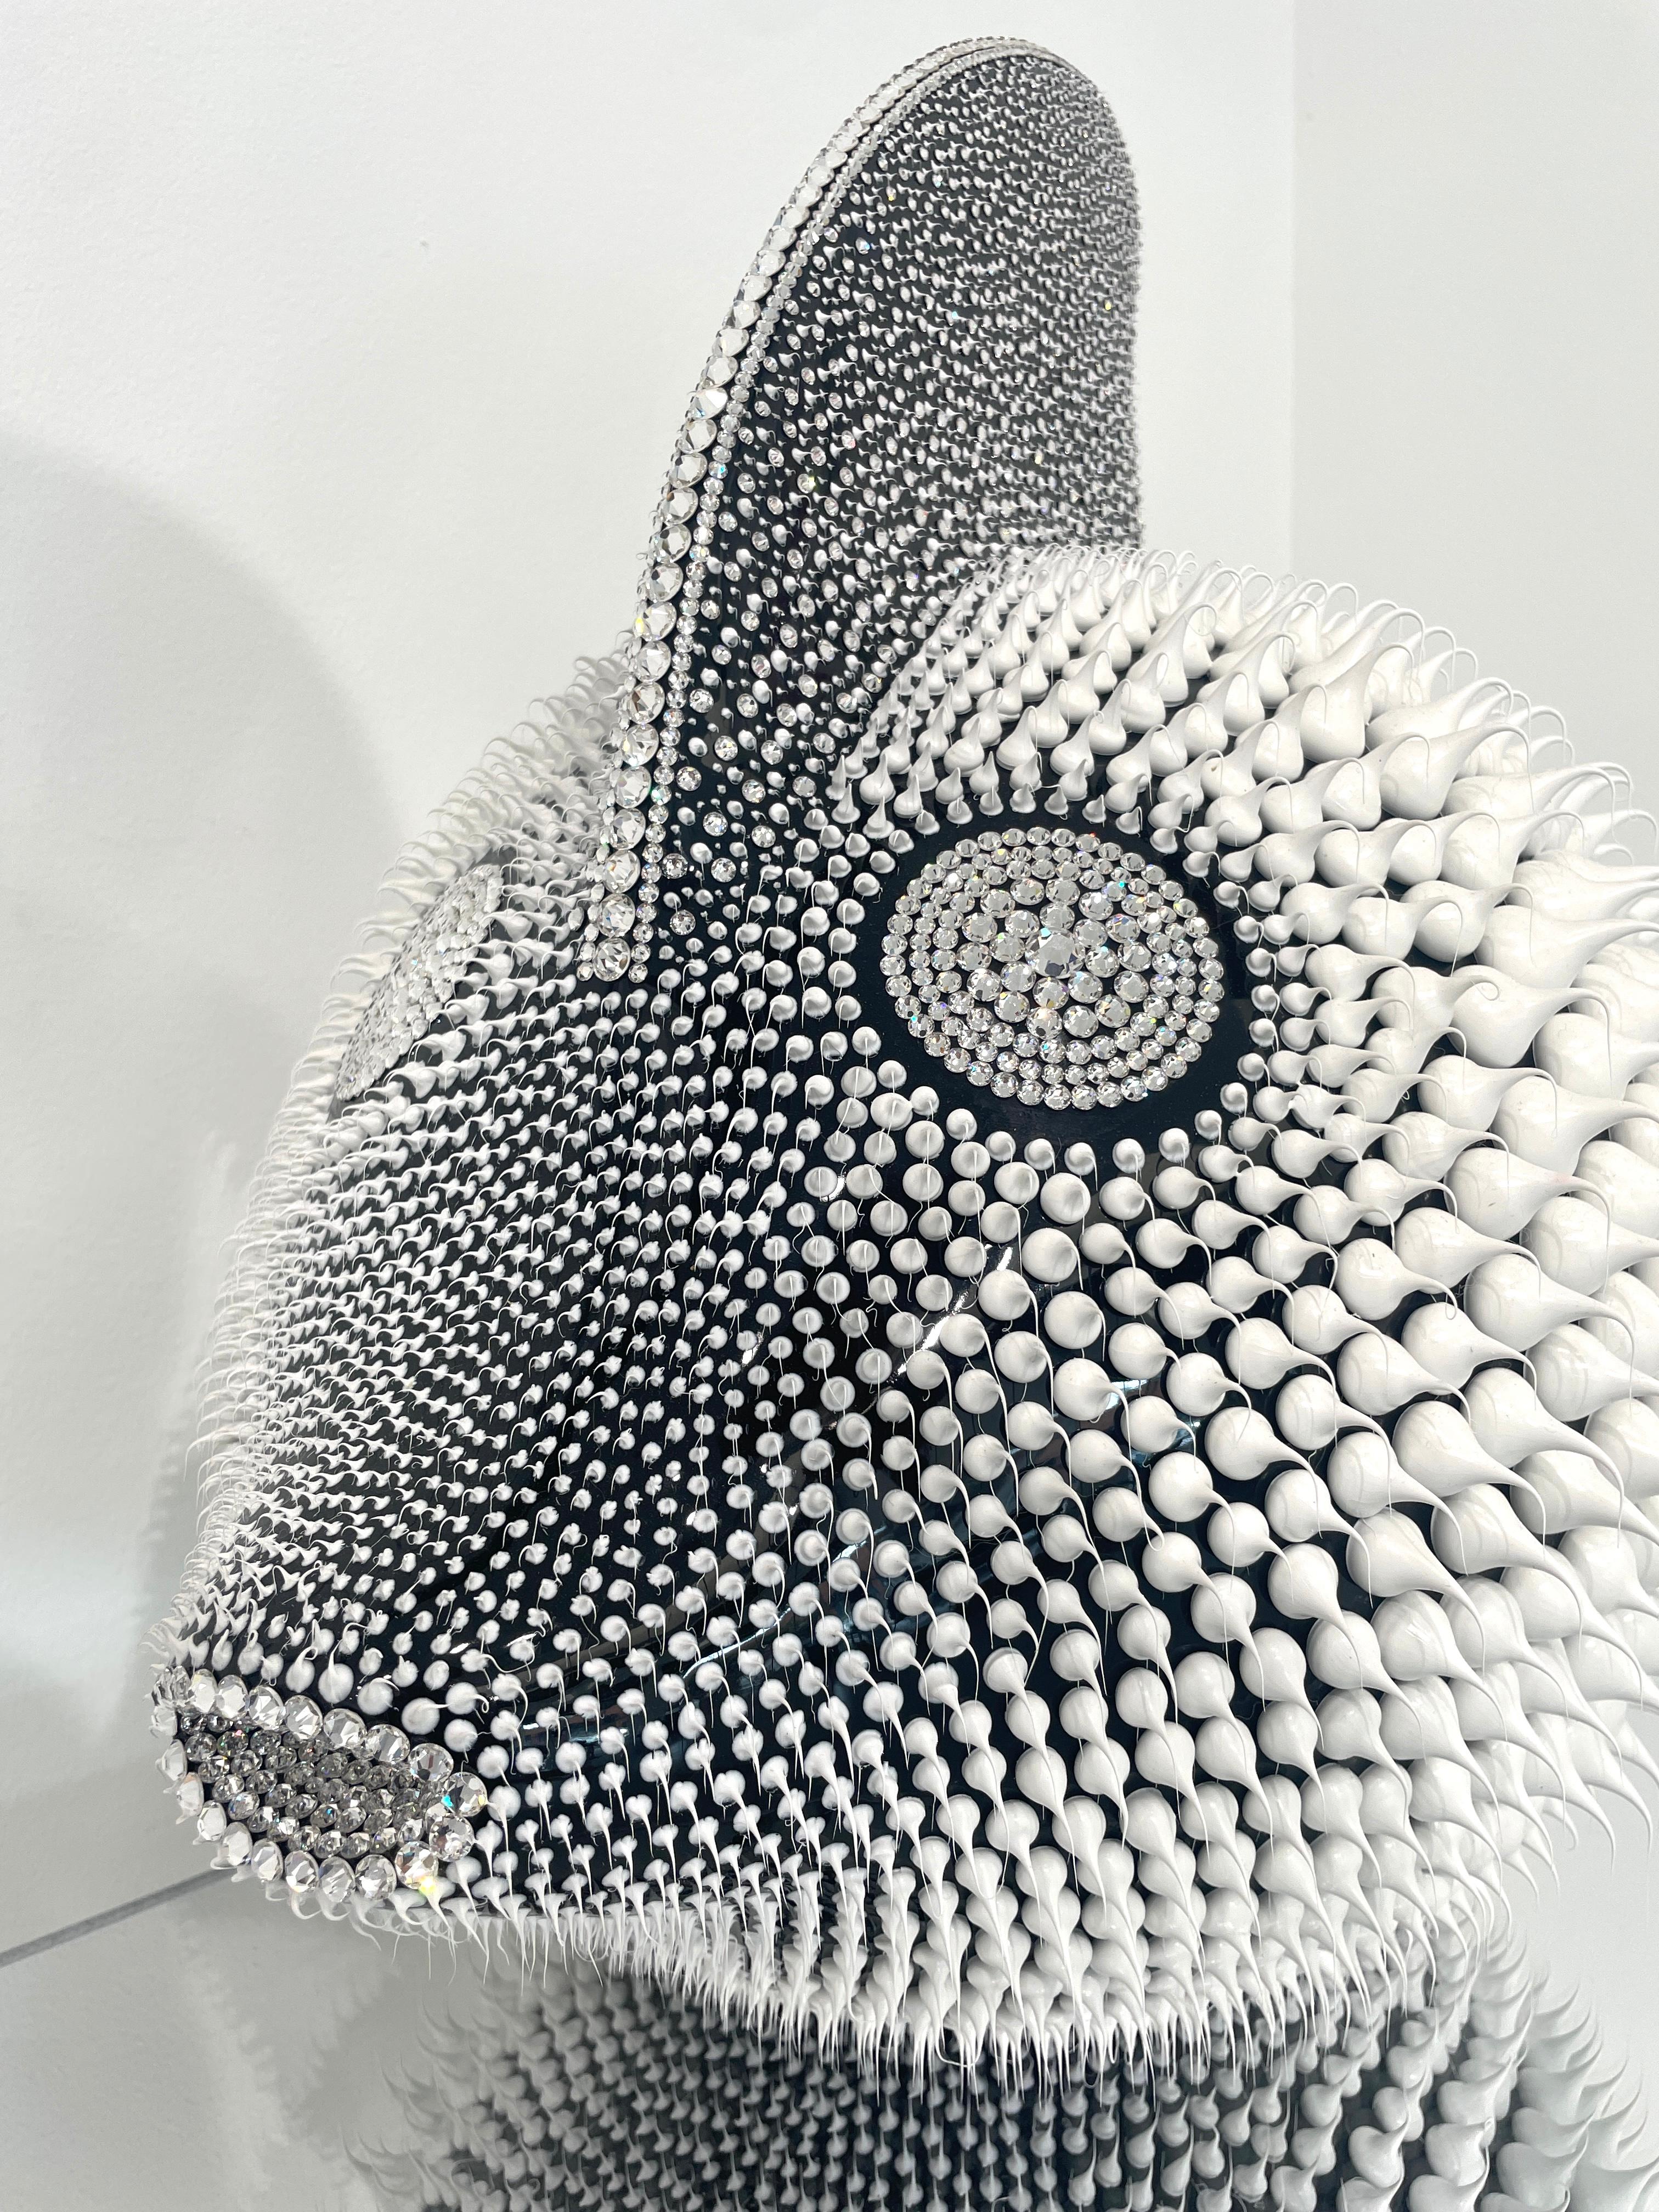 resin fish sculpture